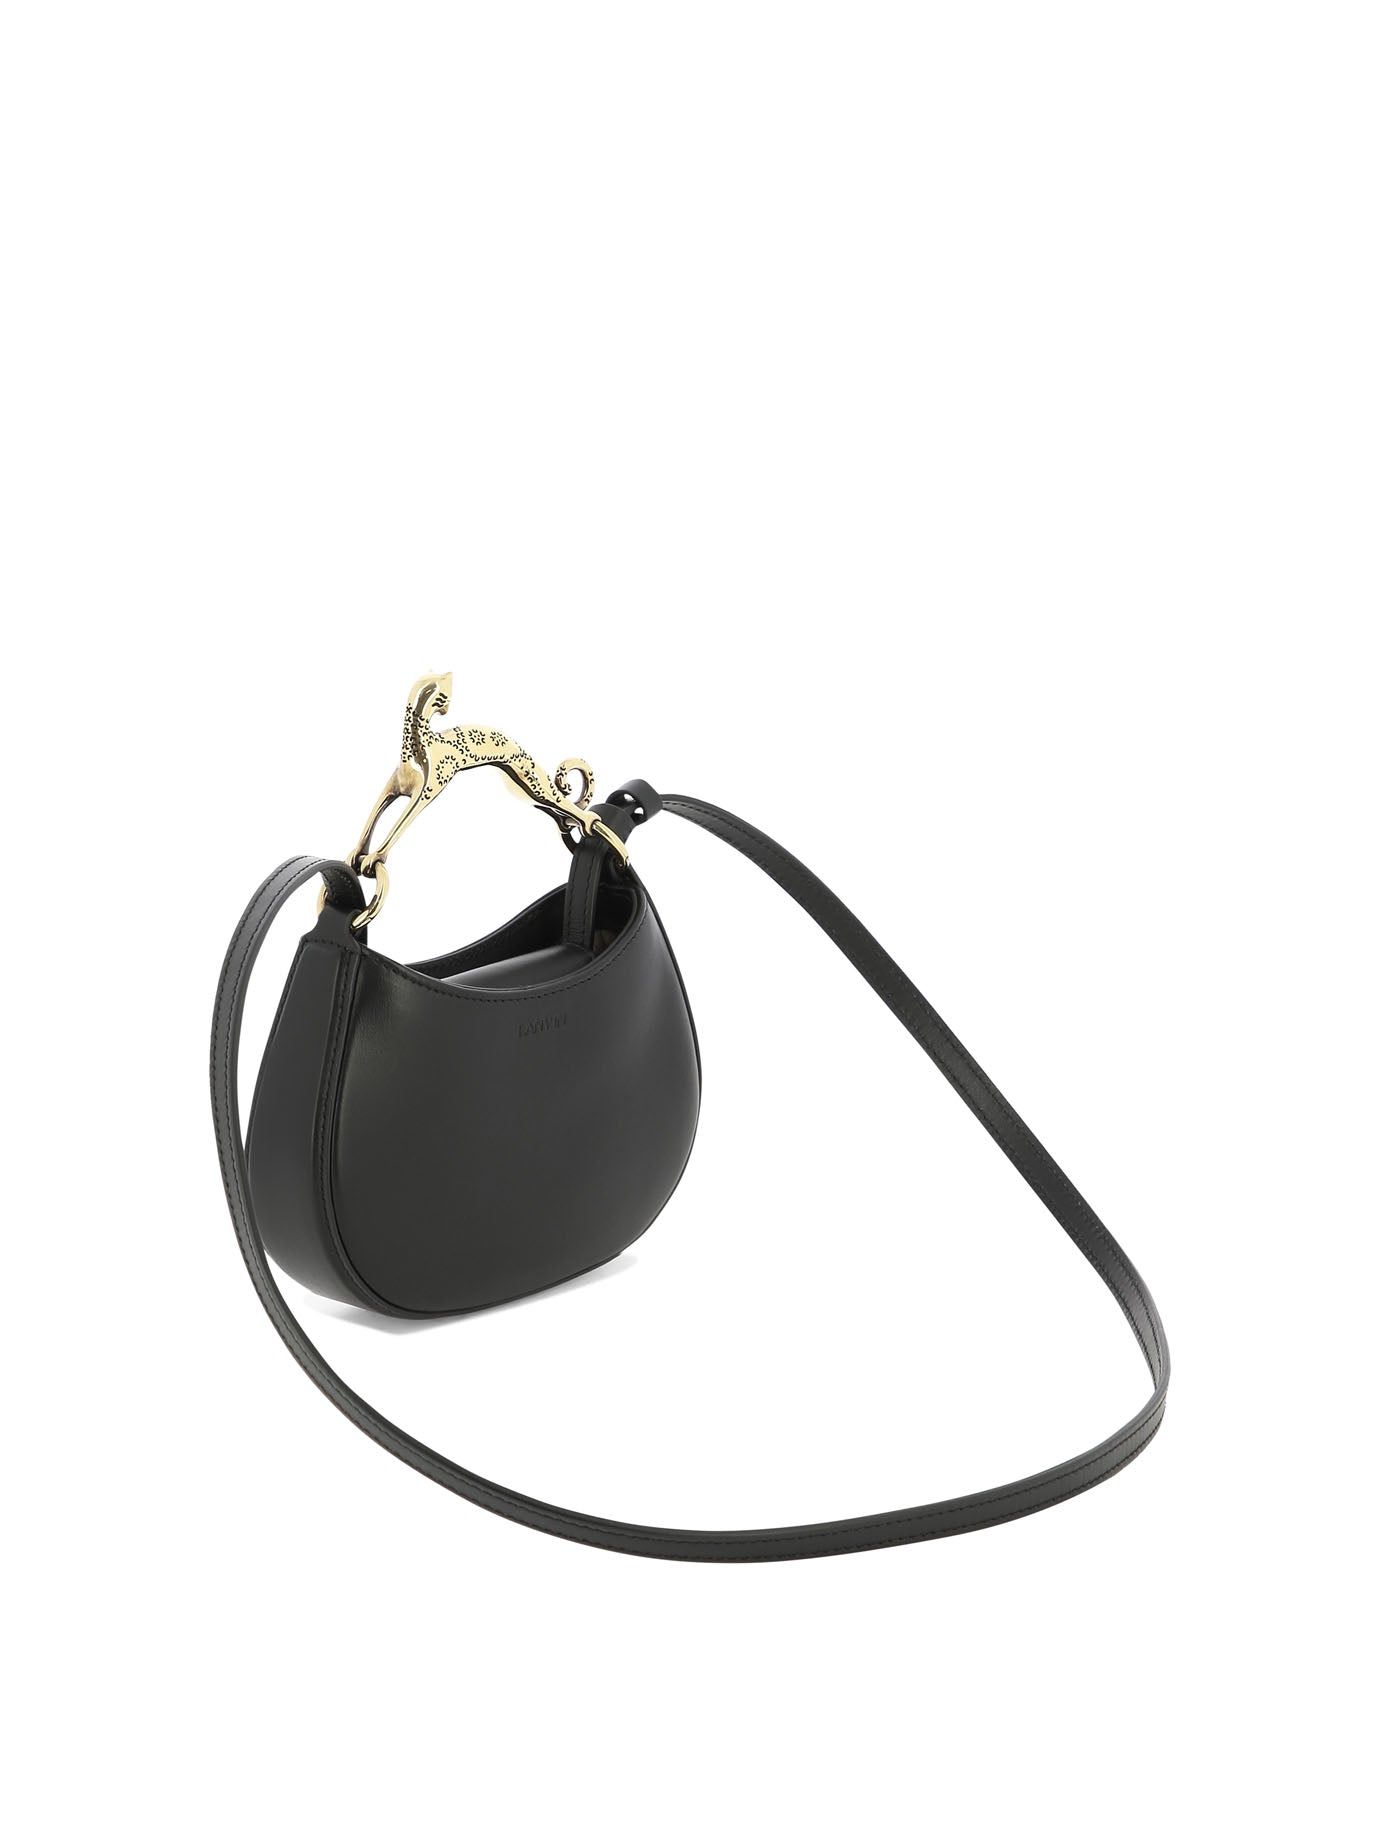 Lanvin: Black Nano Hobo Shoulder Bag